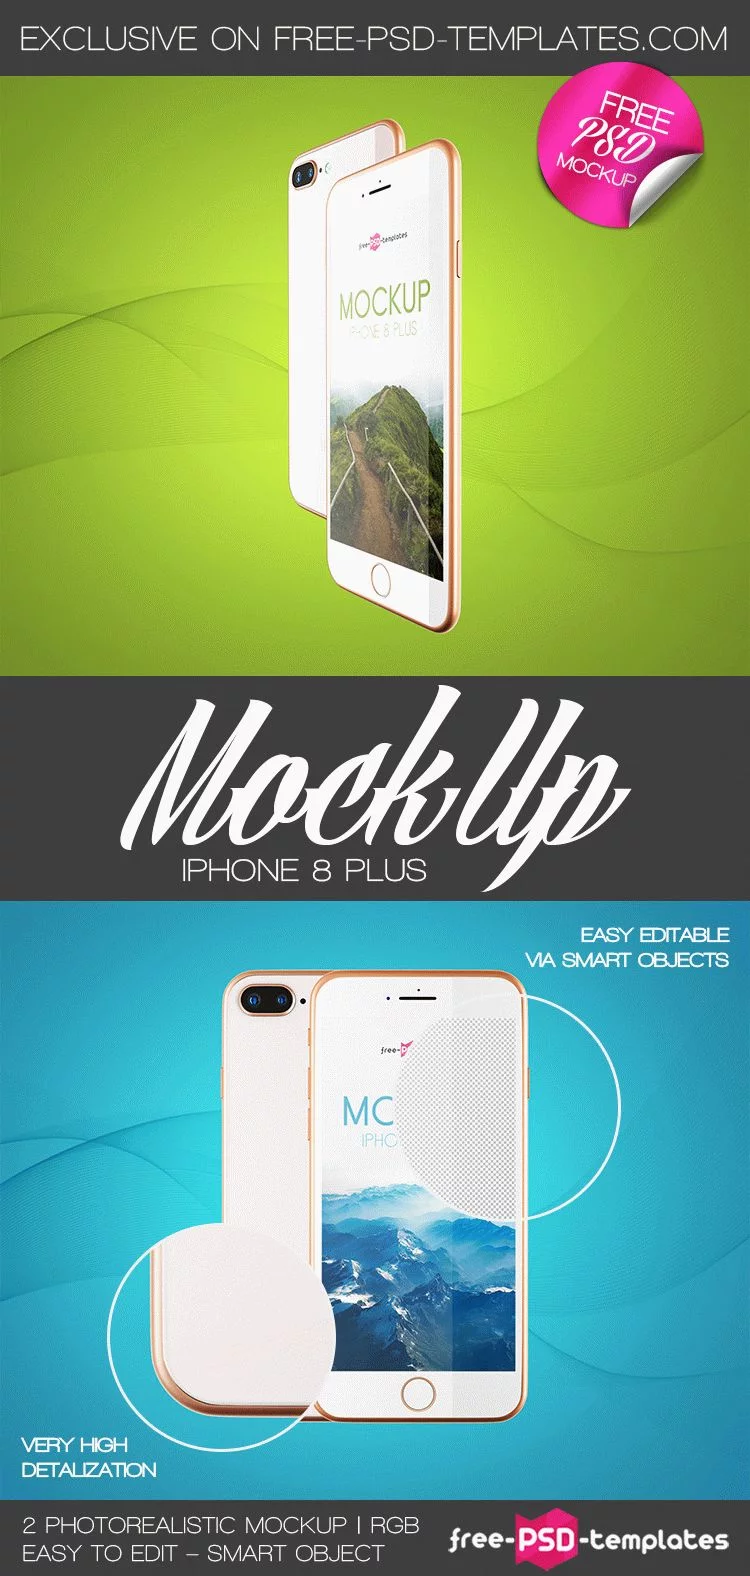 2 Free iPhone 8 Plus Mock-ups in PSD